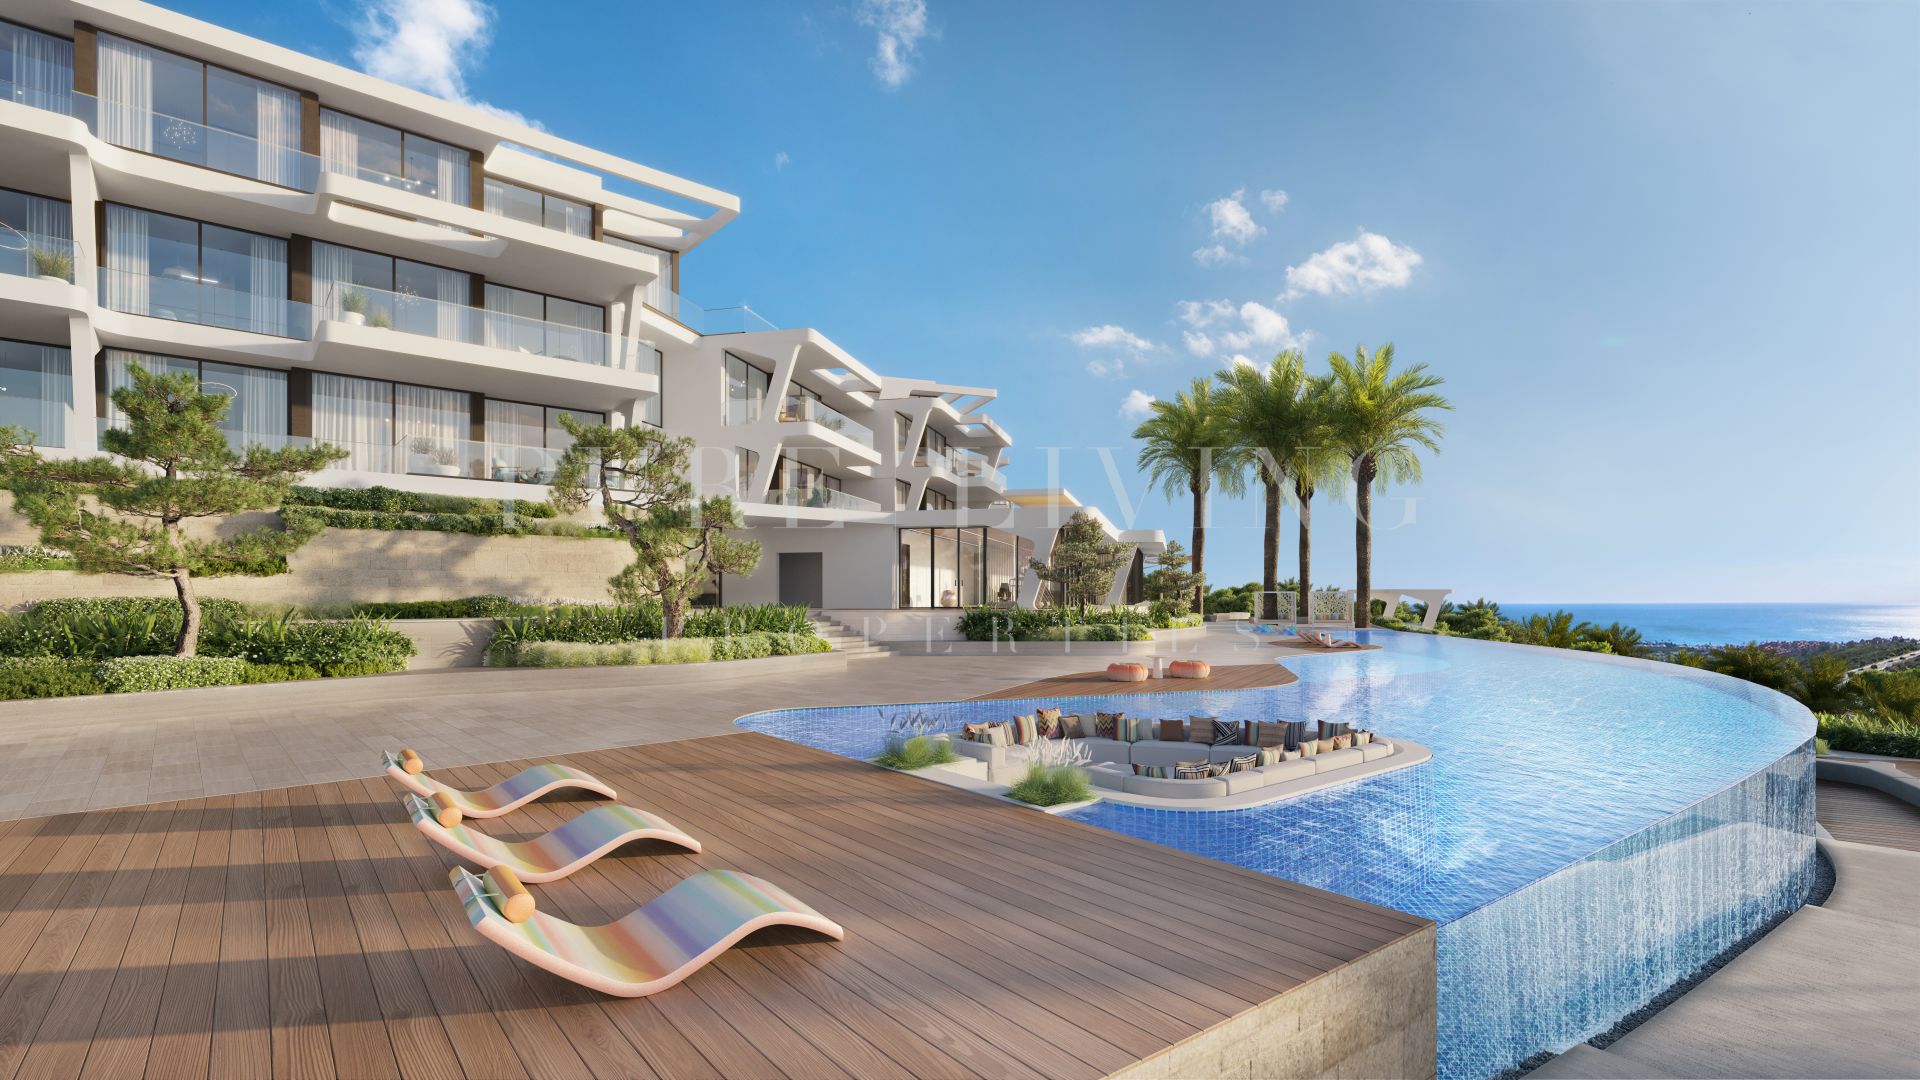 Marea, a new development residing in the pristine embrace of the Finca Cortesin Resort